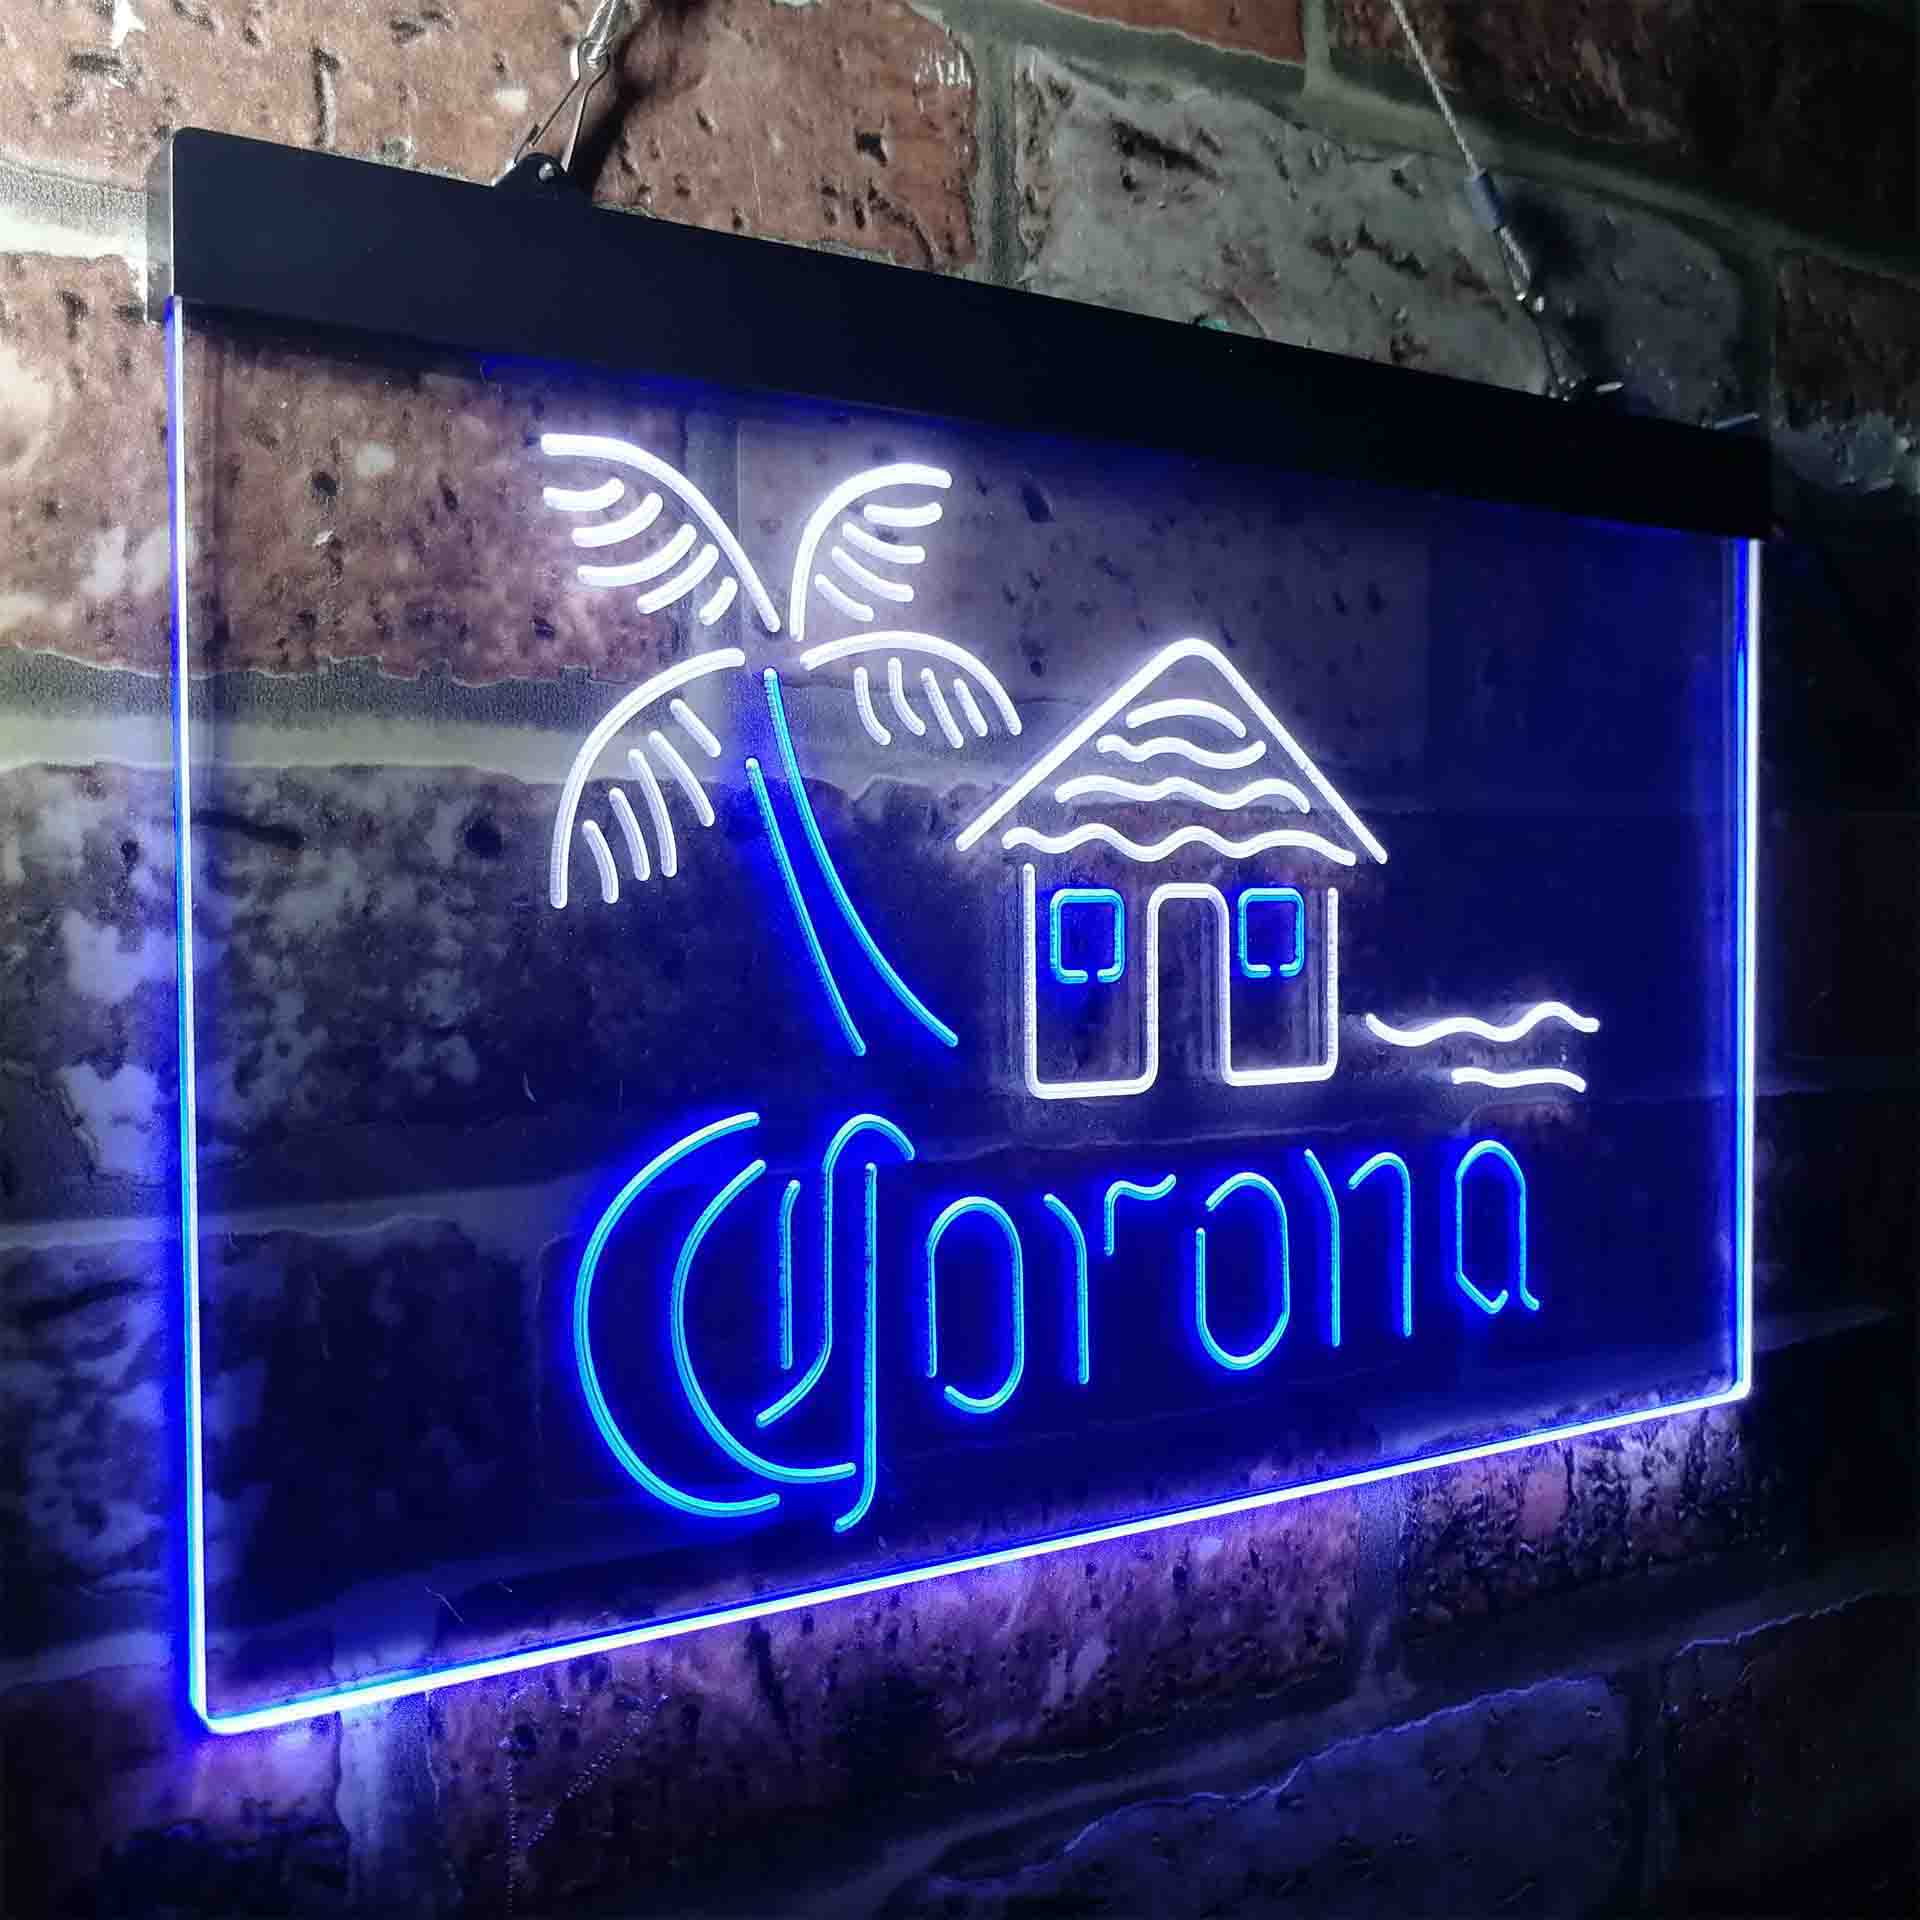 Corona Cabin Island Palm Tree Neon-Like LED Sign